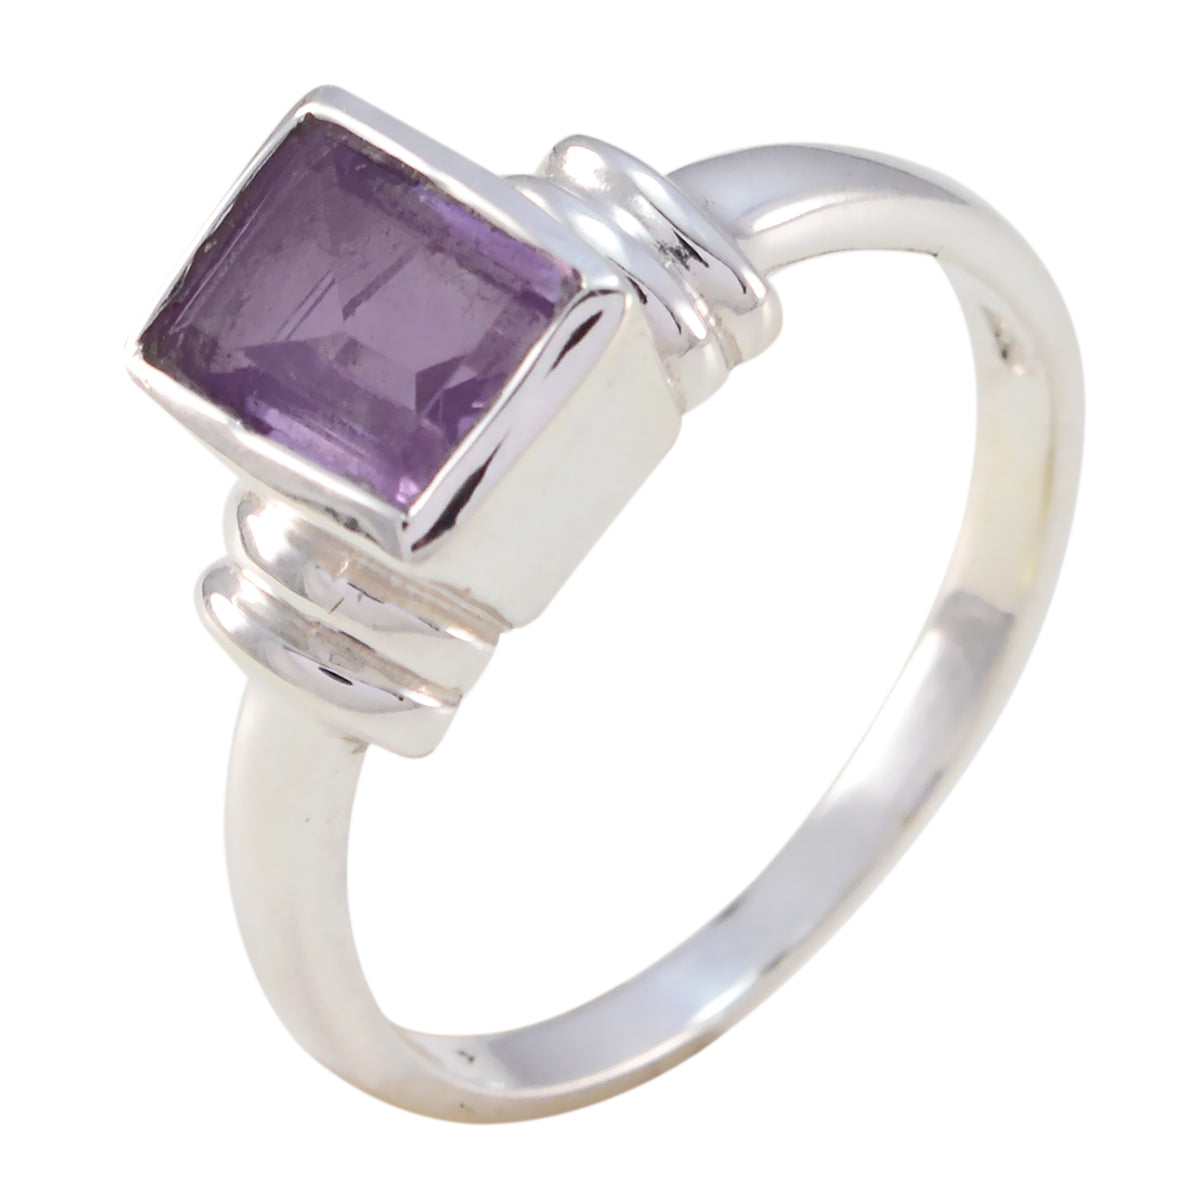 Attractive Gemstones Amethyst Solid Silver Ring Buy Jewelry Online